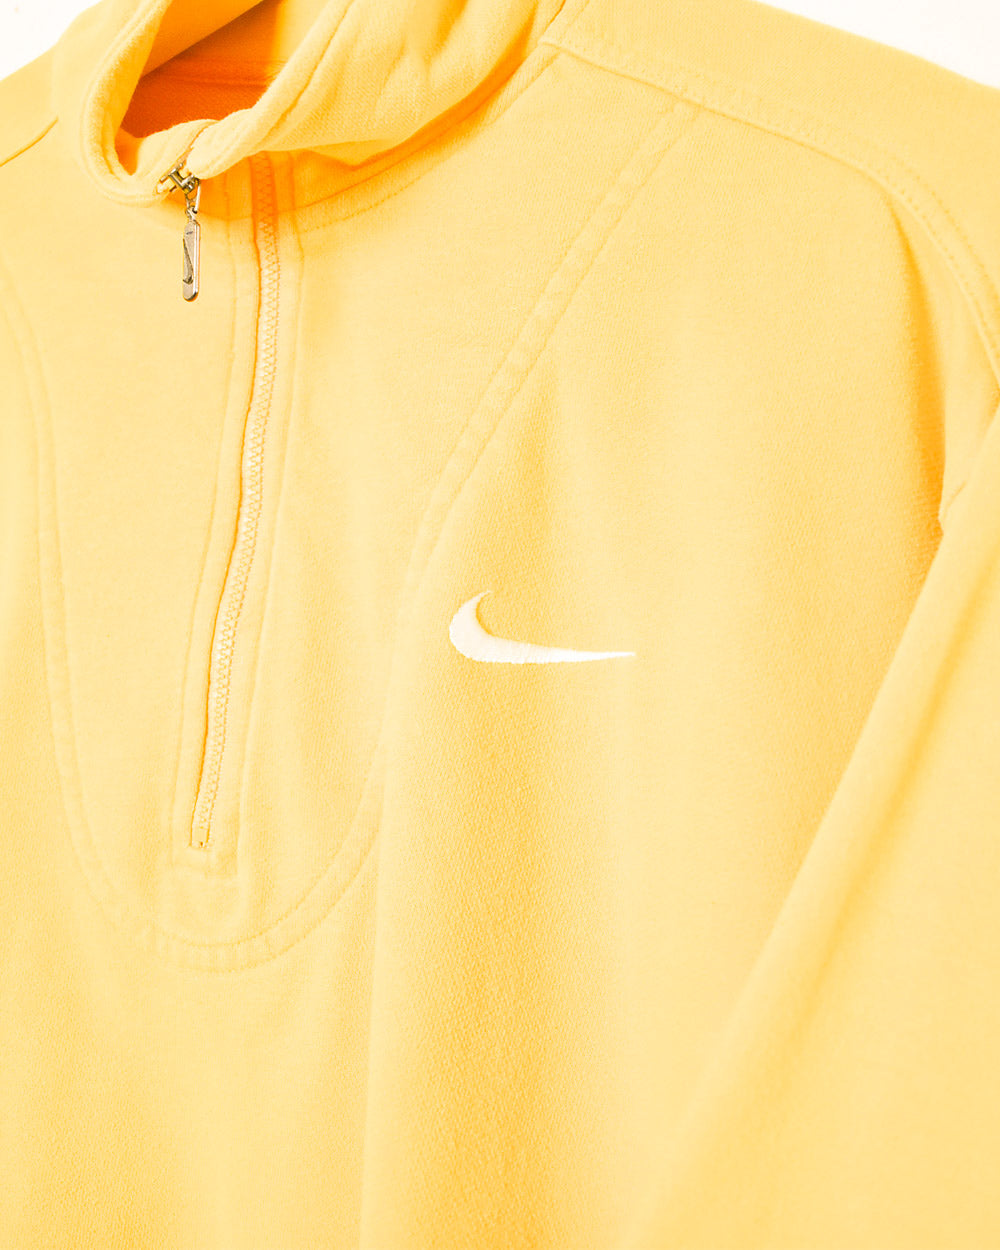 Yellow Nike Women's 1/4 Zip Sweatshirt - Small 